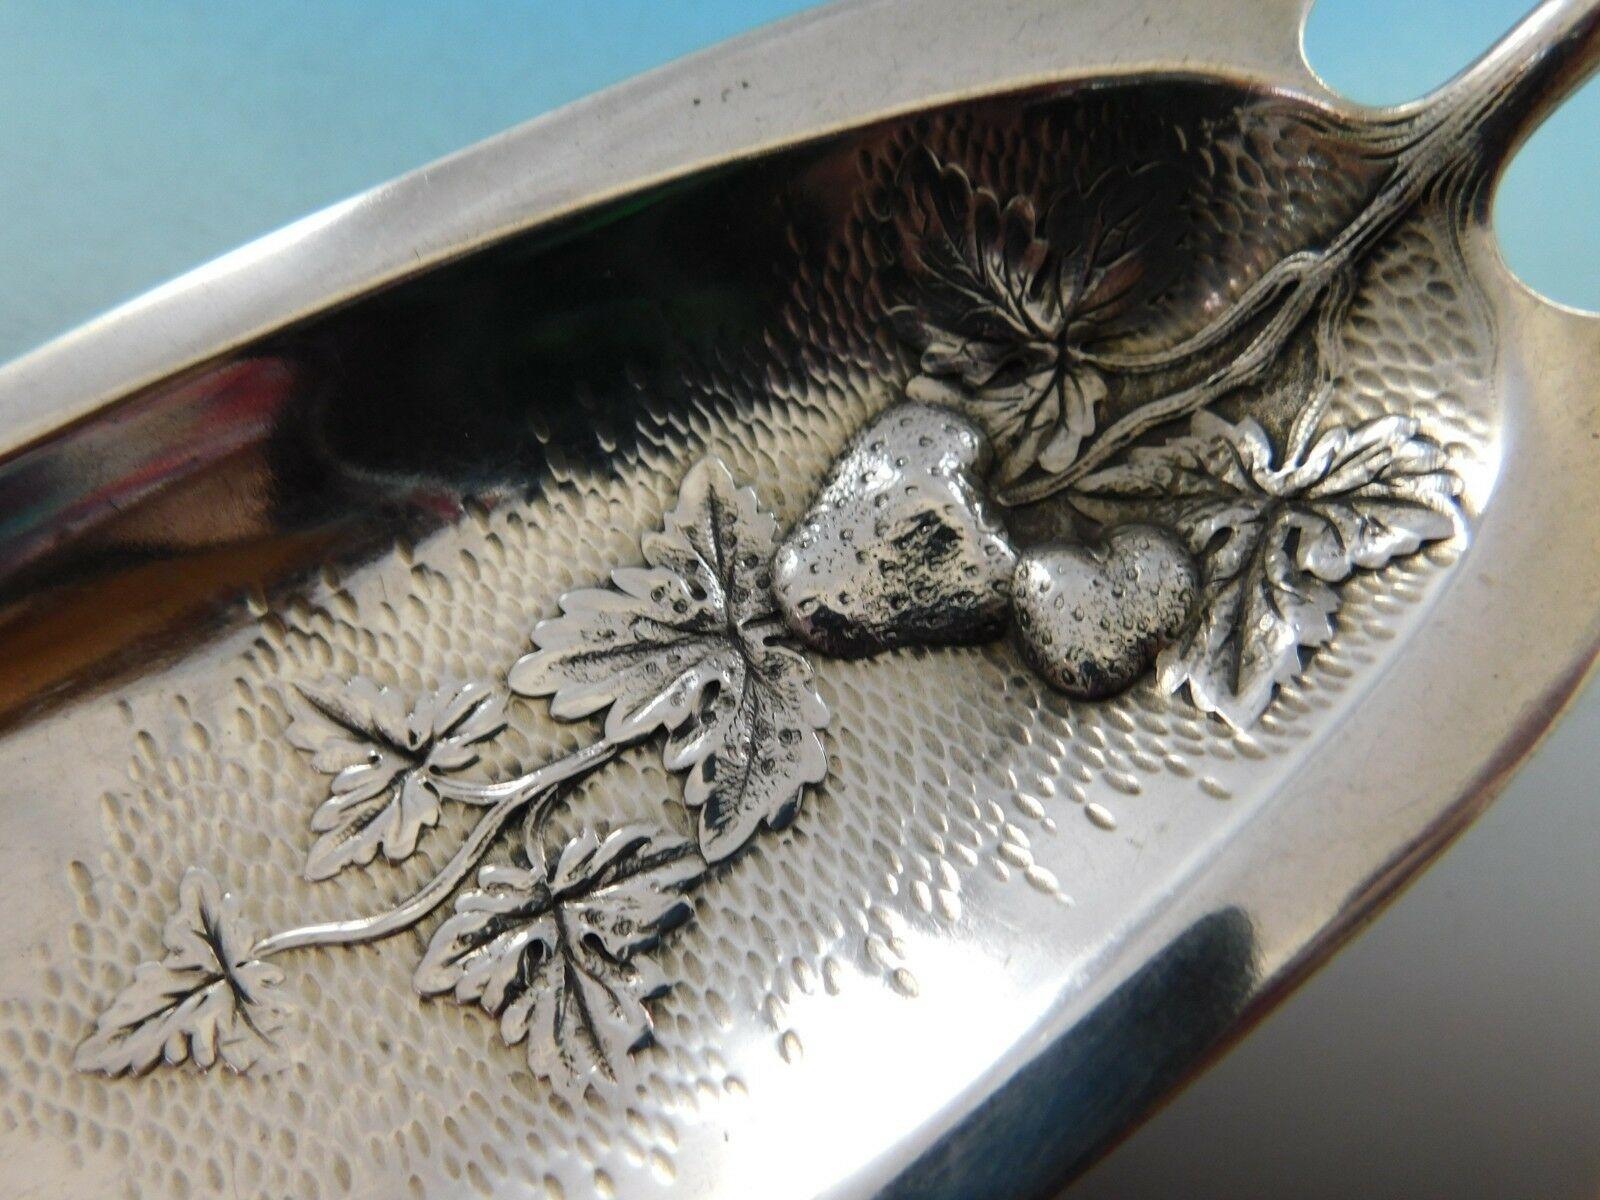 Eglantine by Gorham

Stunning sterling silver crumber measuring 14